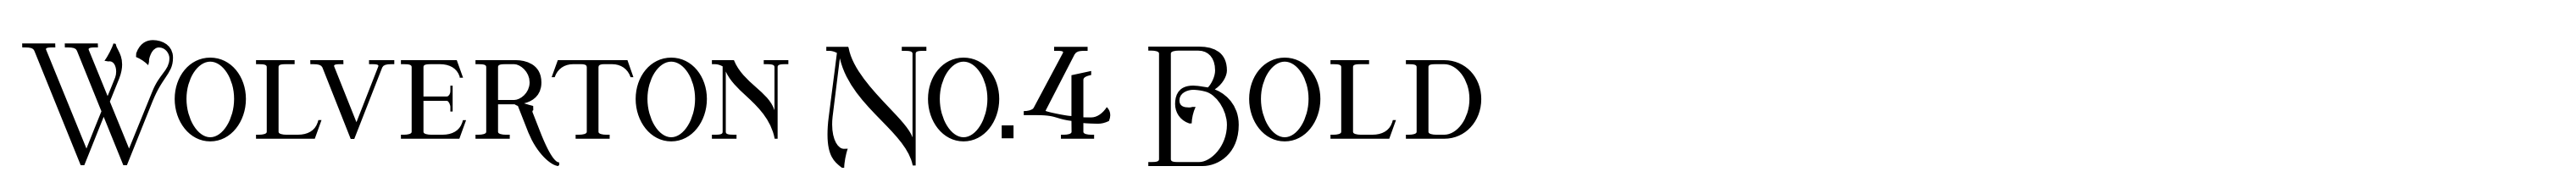 Wolverton No.4 Bold